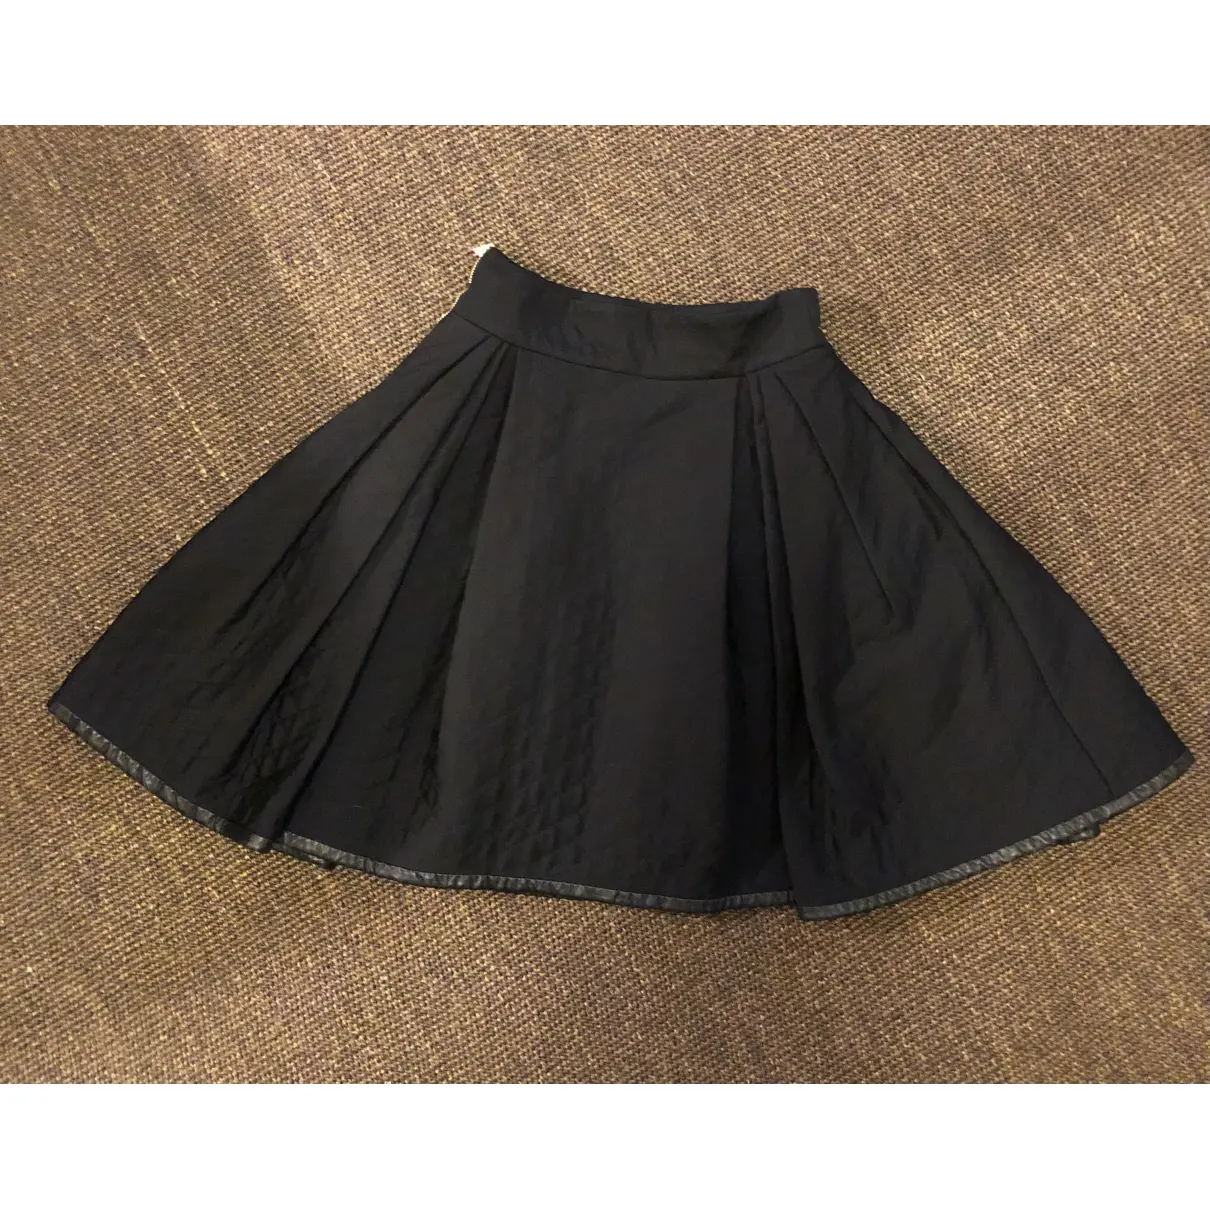 Buy Mangano Skirt online